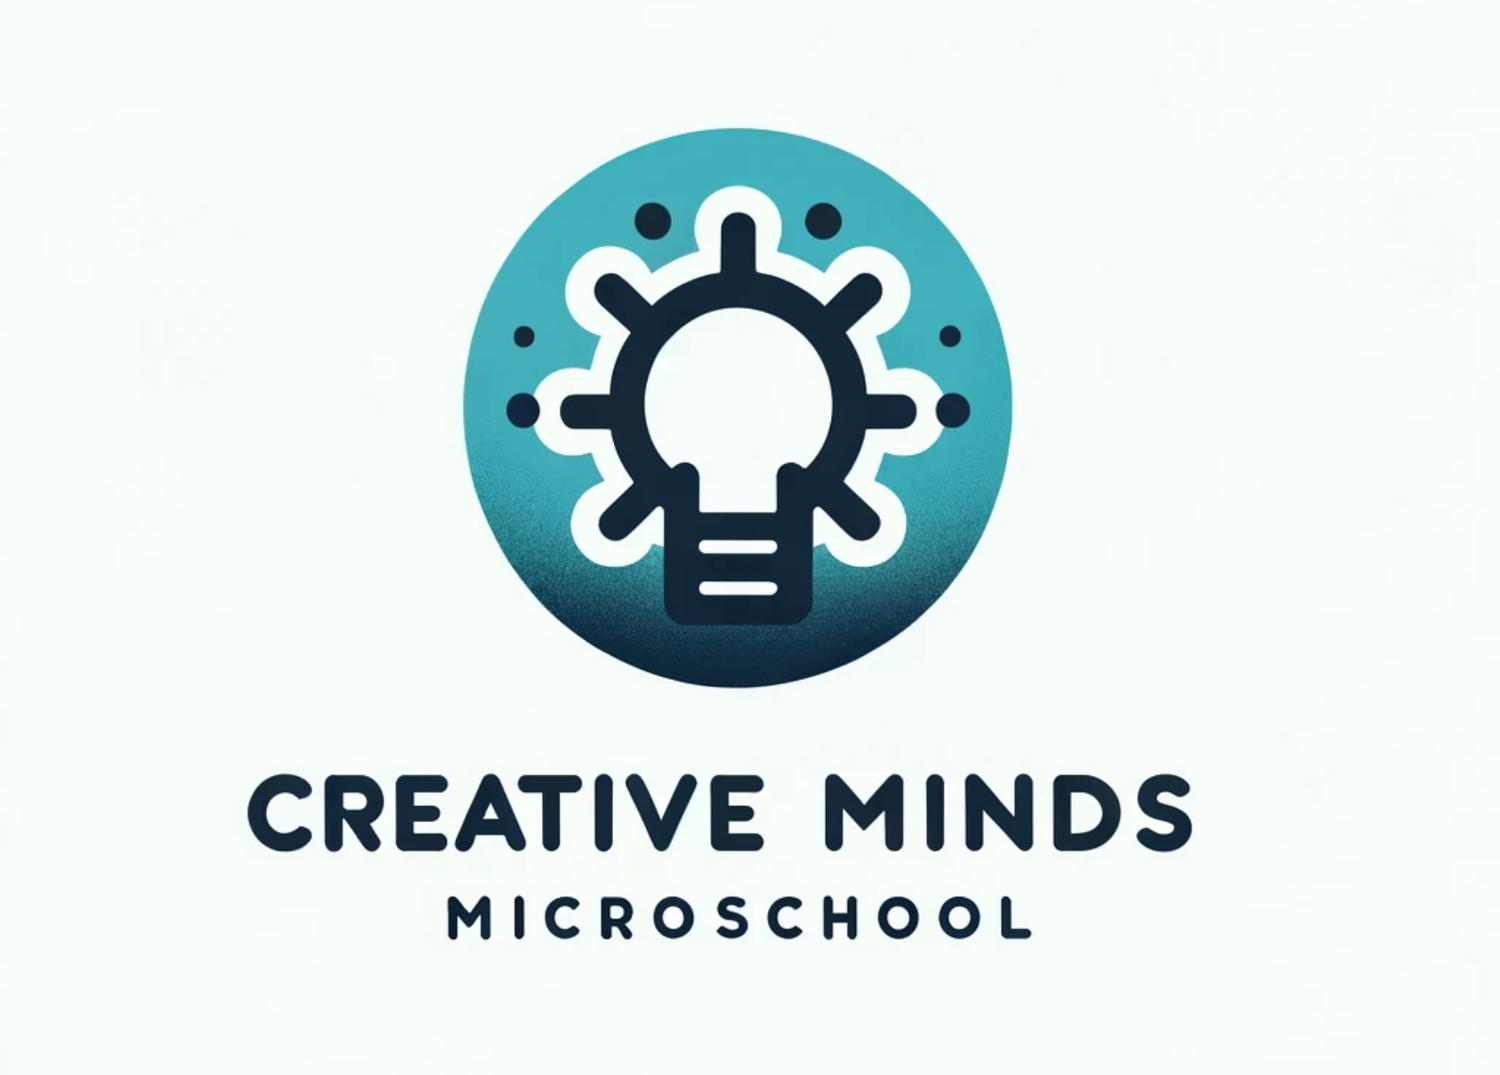 Creative Minds Microschool